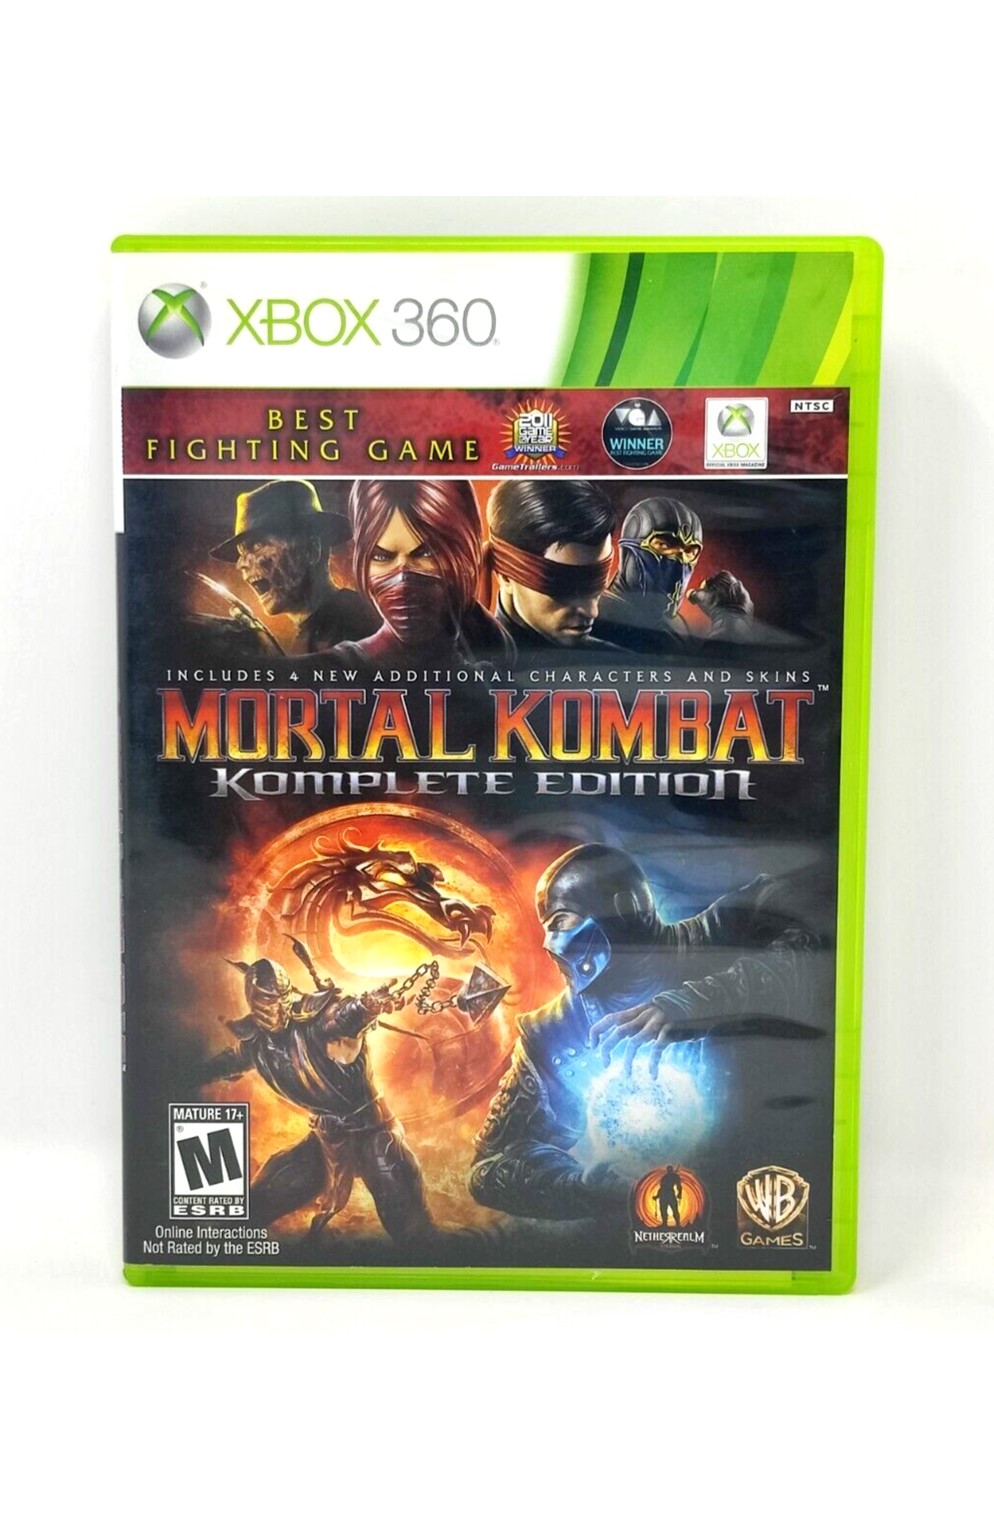 Mortal Kombat 9 Komplete Edition ( PS3 ) : Rain ( Fatalities + X-RAY ) 